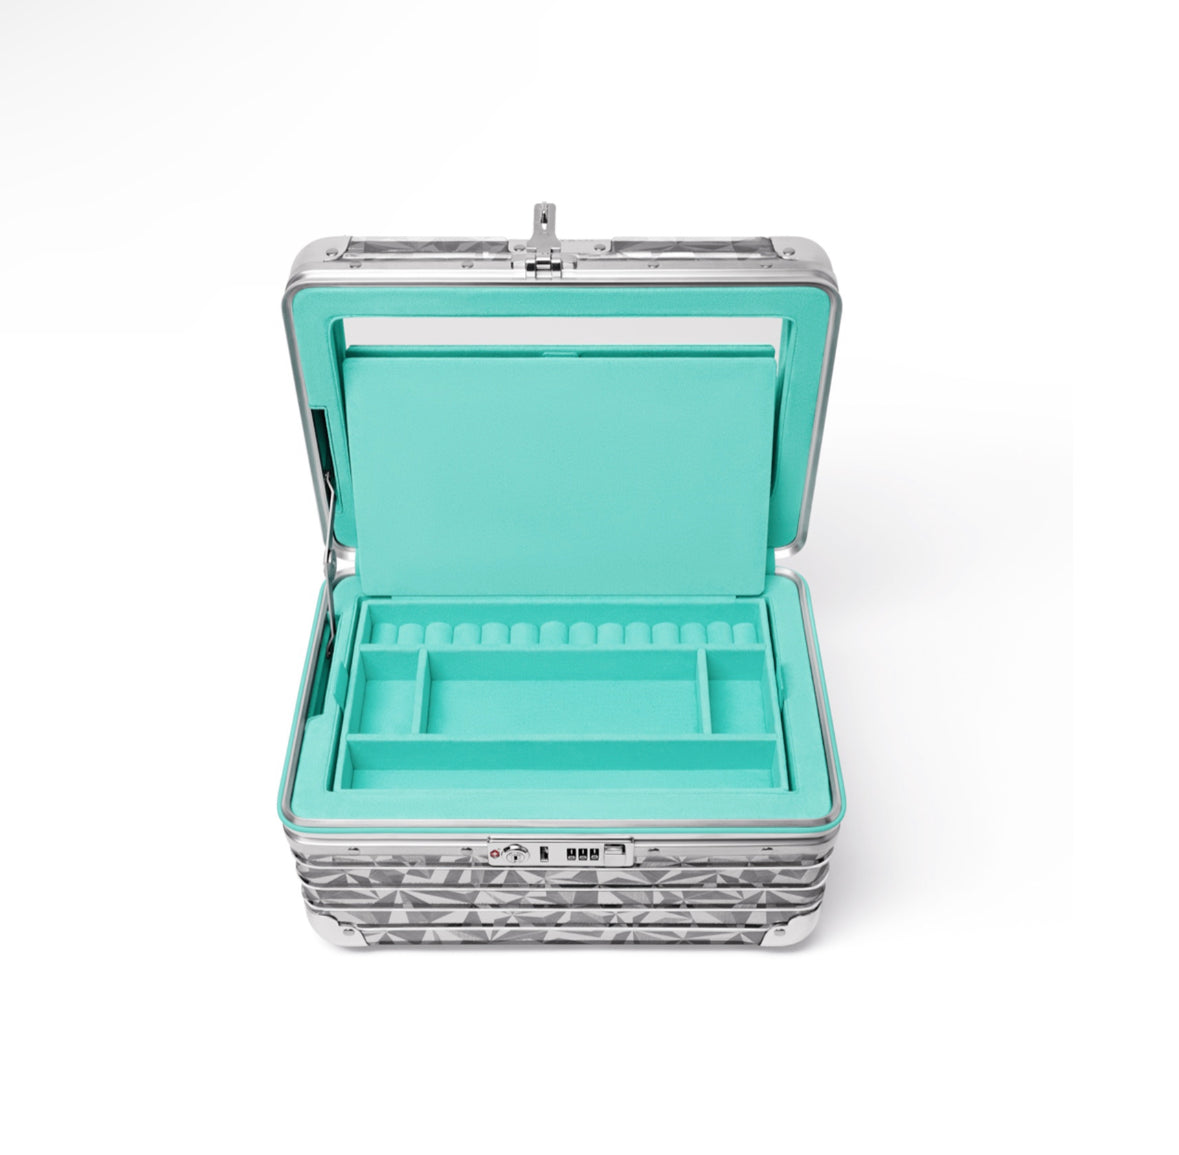 Tiffany & Co. x RIMOWA Jewellery Case